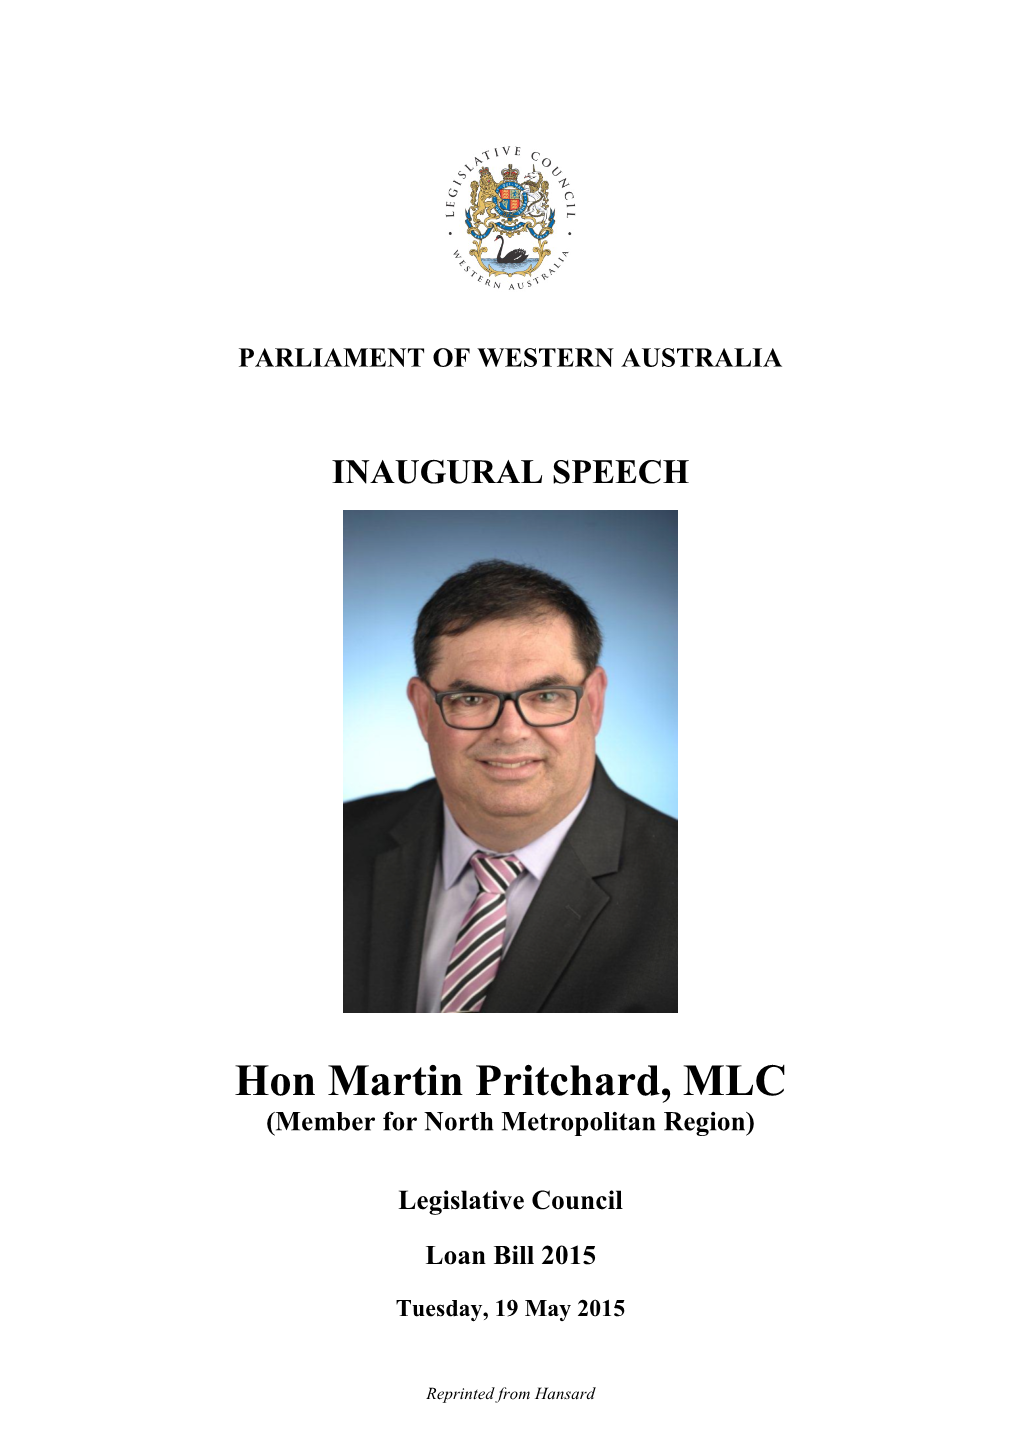 Hon Martin Pritchard, MLC (Member for North Metropolitan Region)